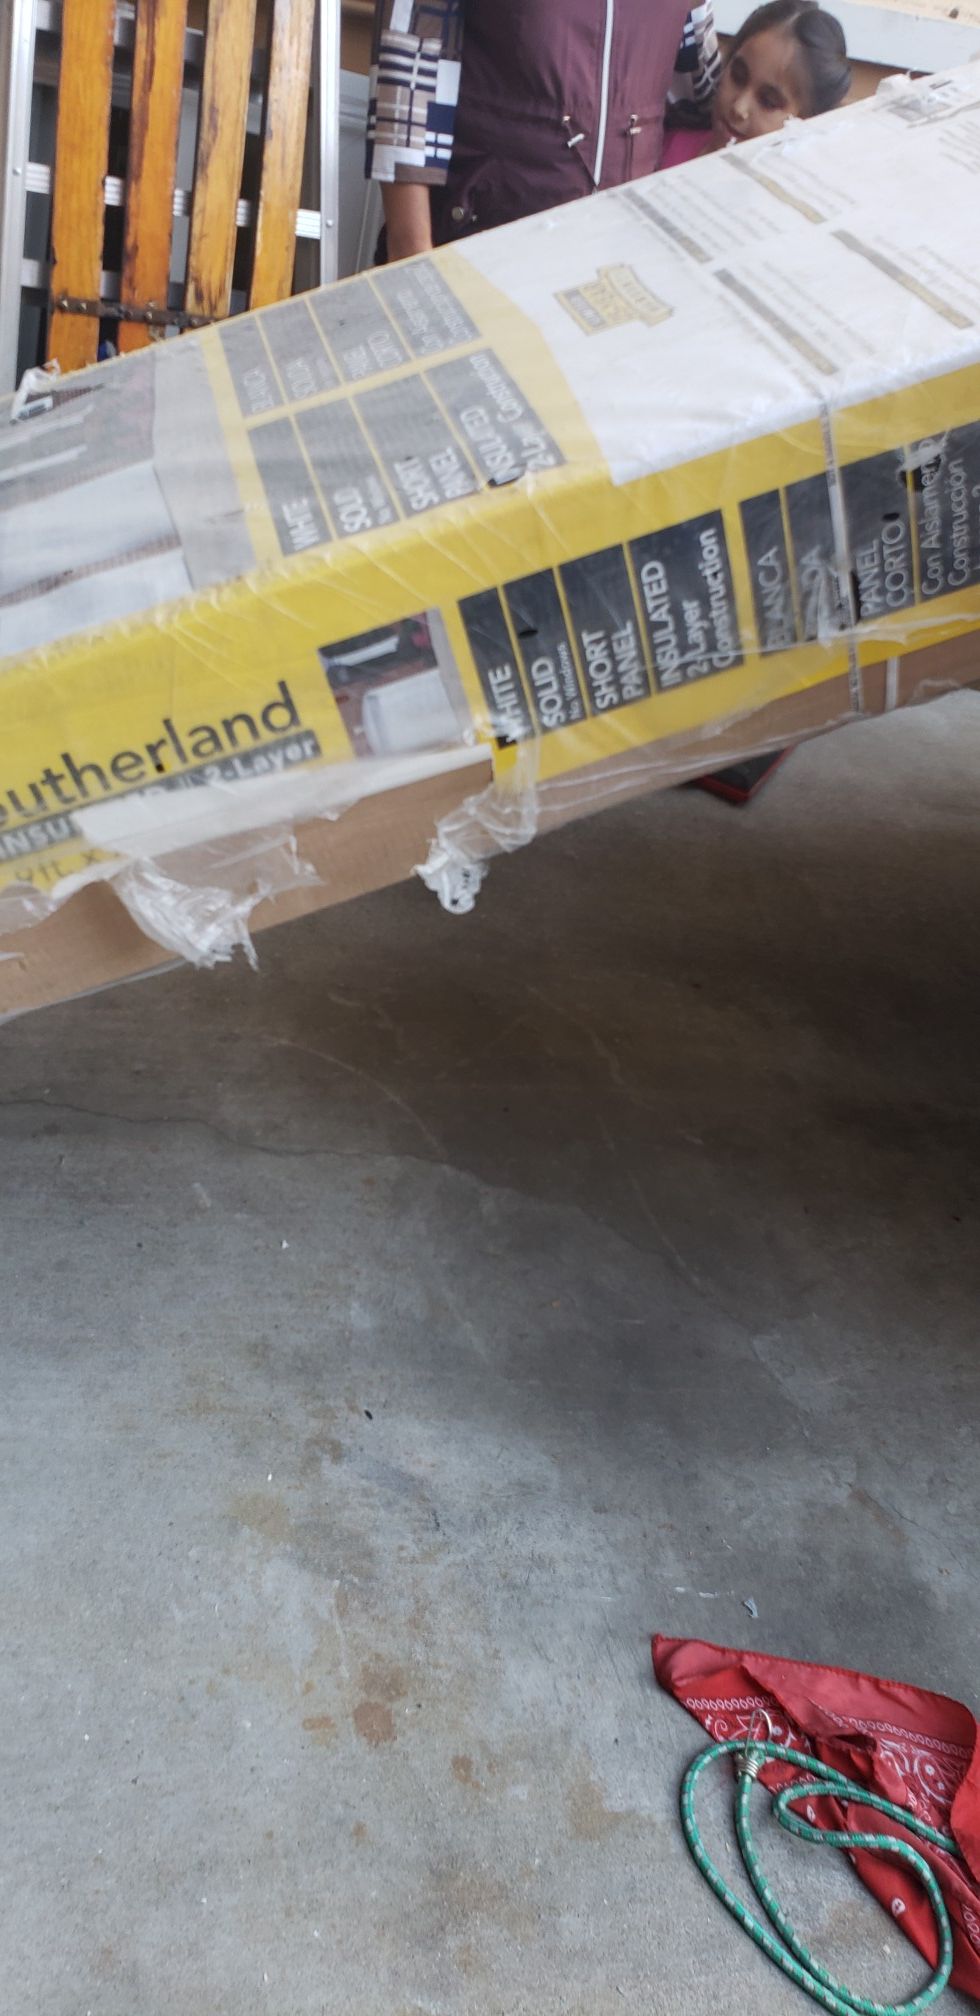 Sutherland insulated 2 layer garage door